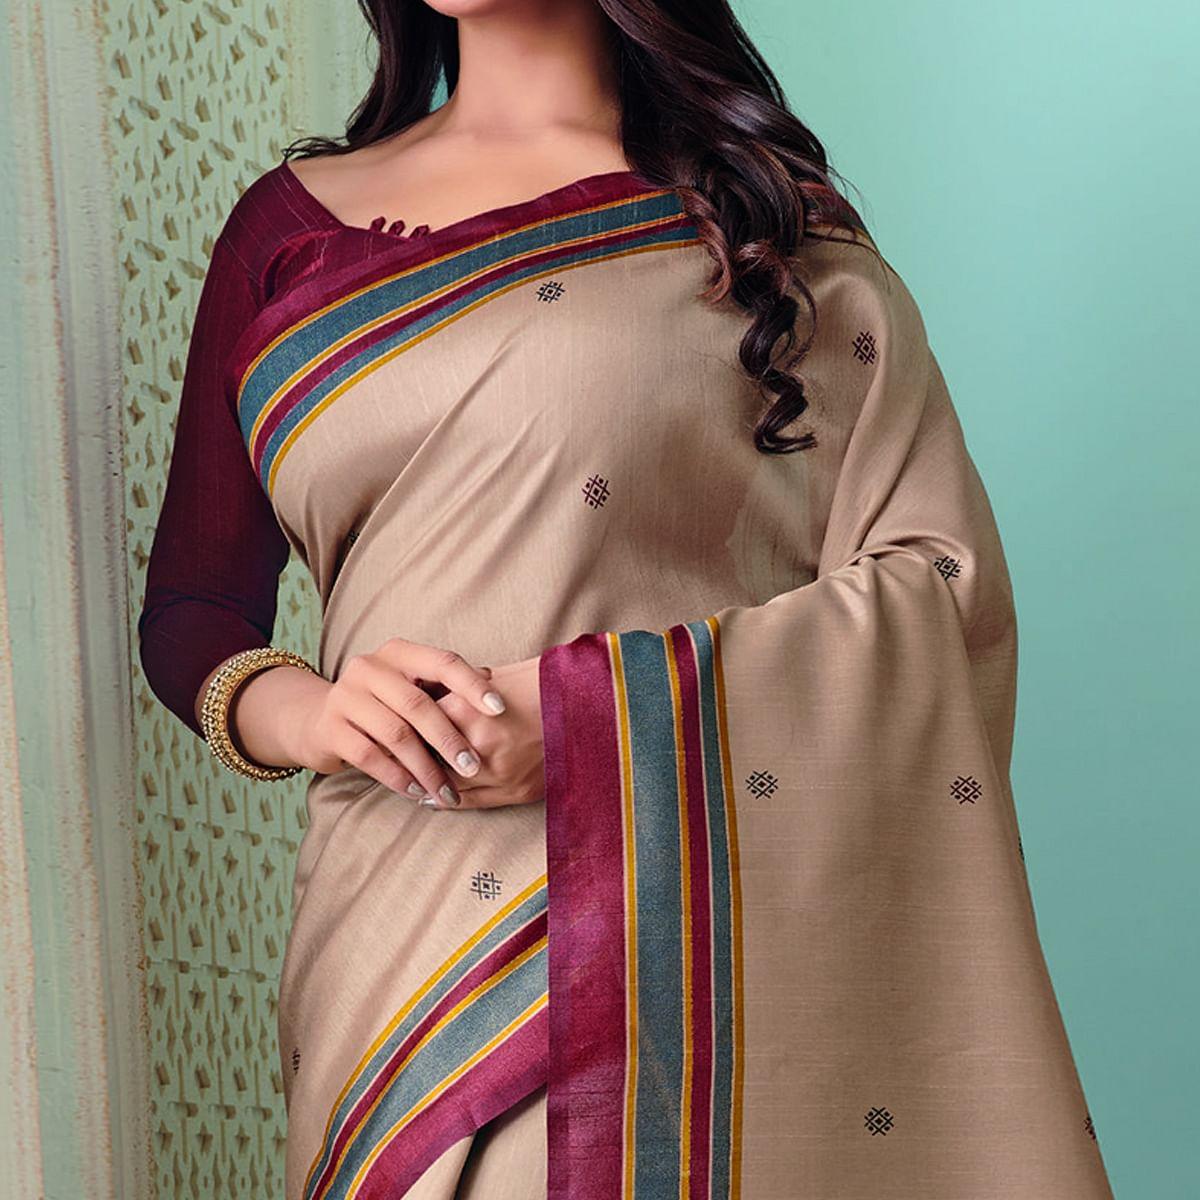 Majesty Brown Colored Casual Wear Printed Bhagalpuri Saree - Peachmode